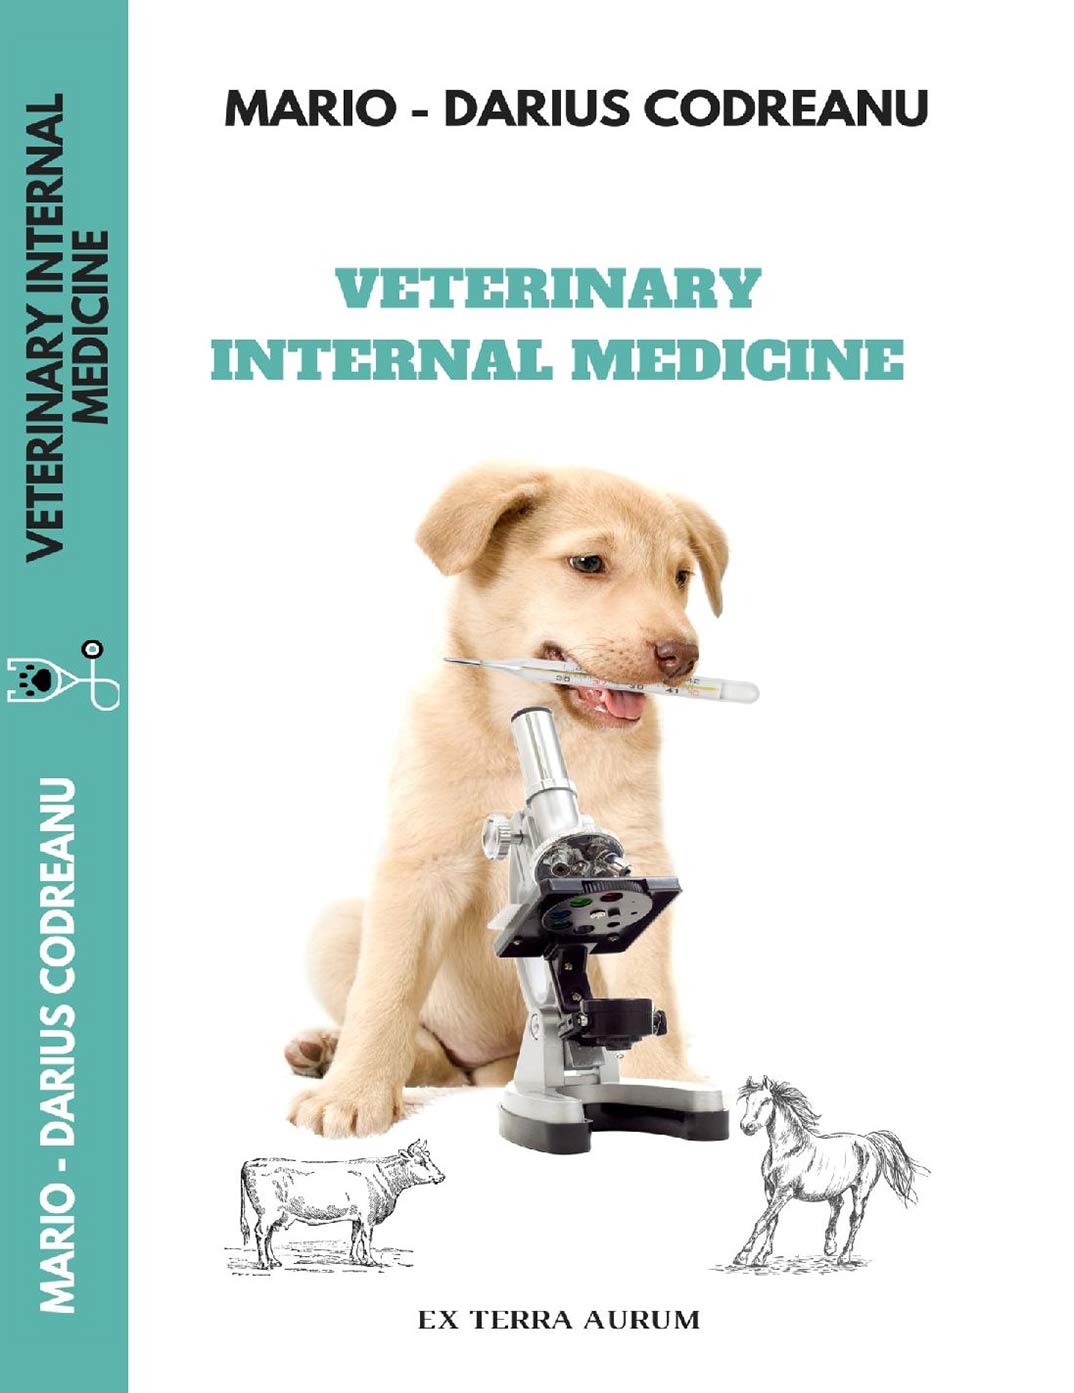 Coperta Veterinary Internal Medicine 1 page 001